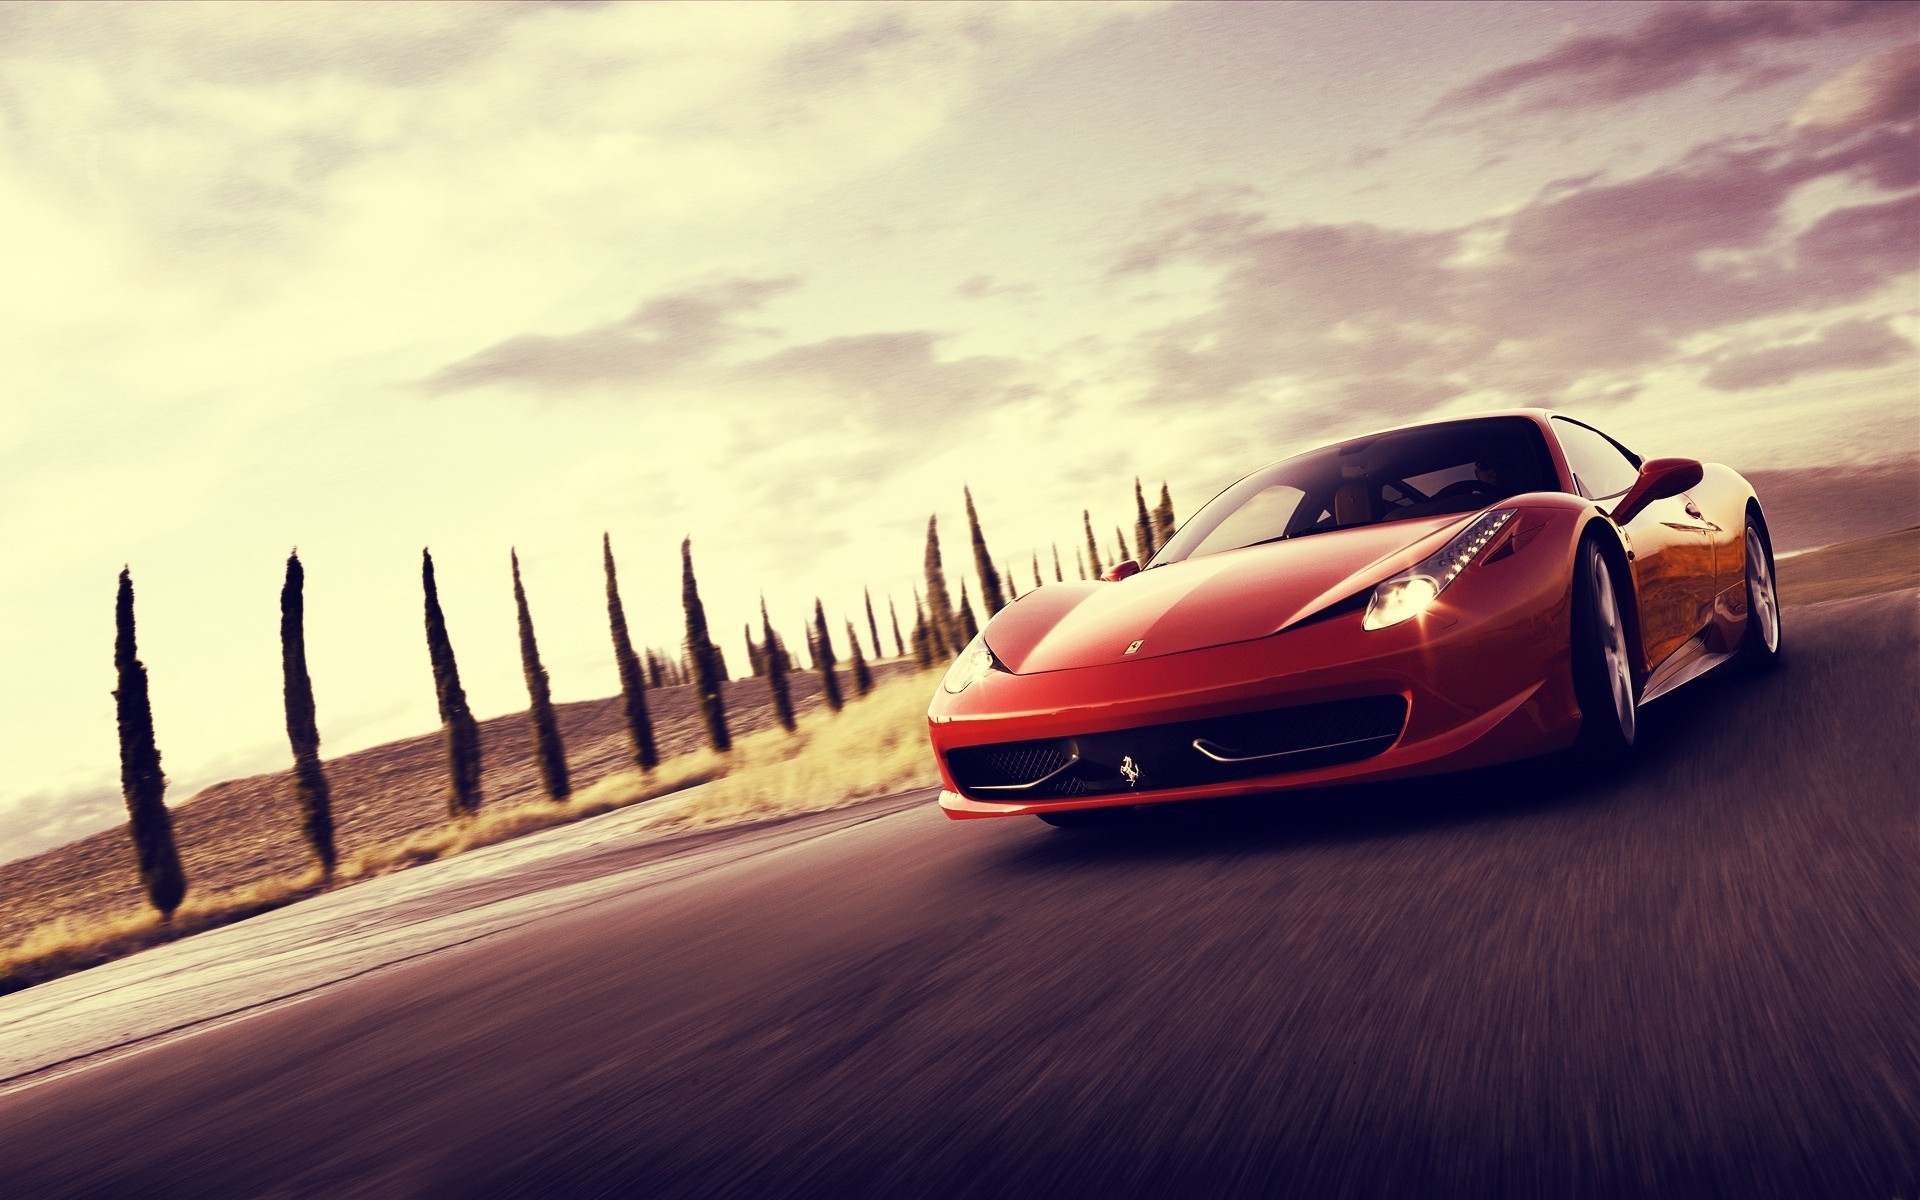 Descarga gratuita de fondo de pantalla para móvil de Ferrari, Transporte, Automóvil.